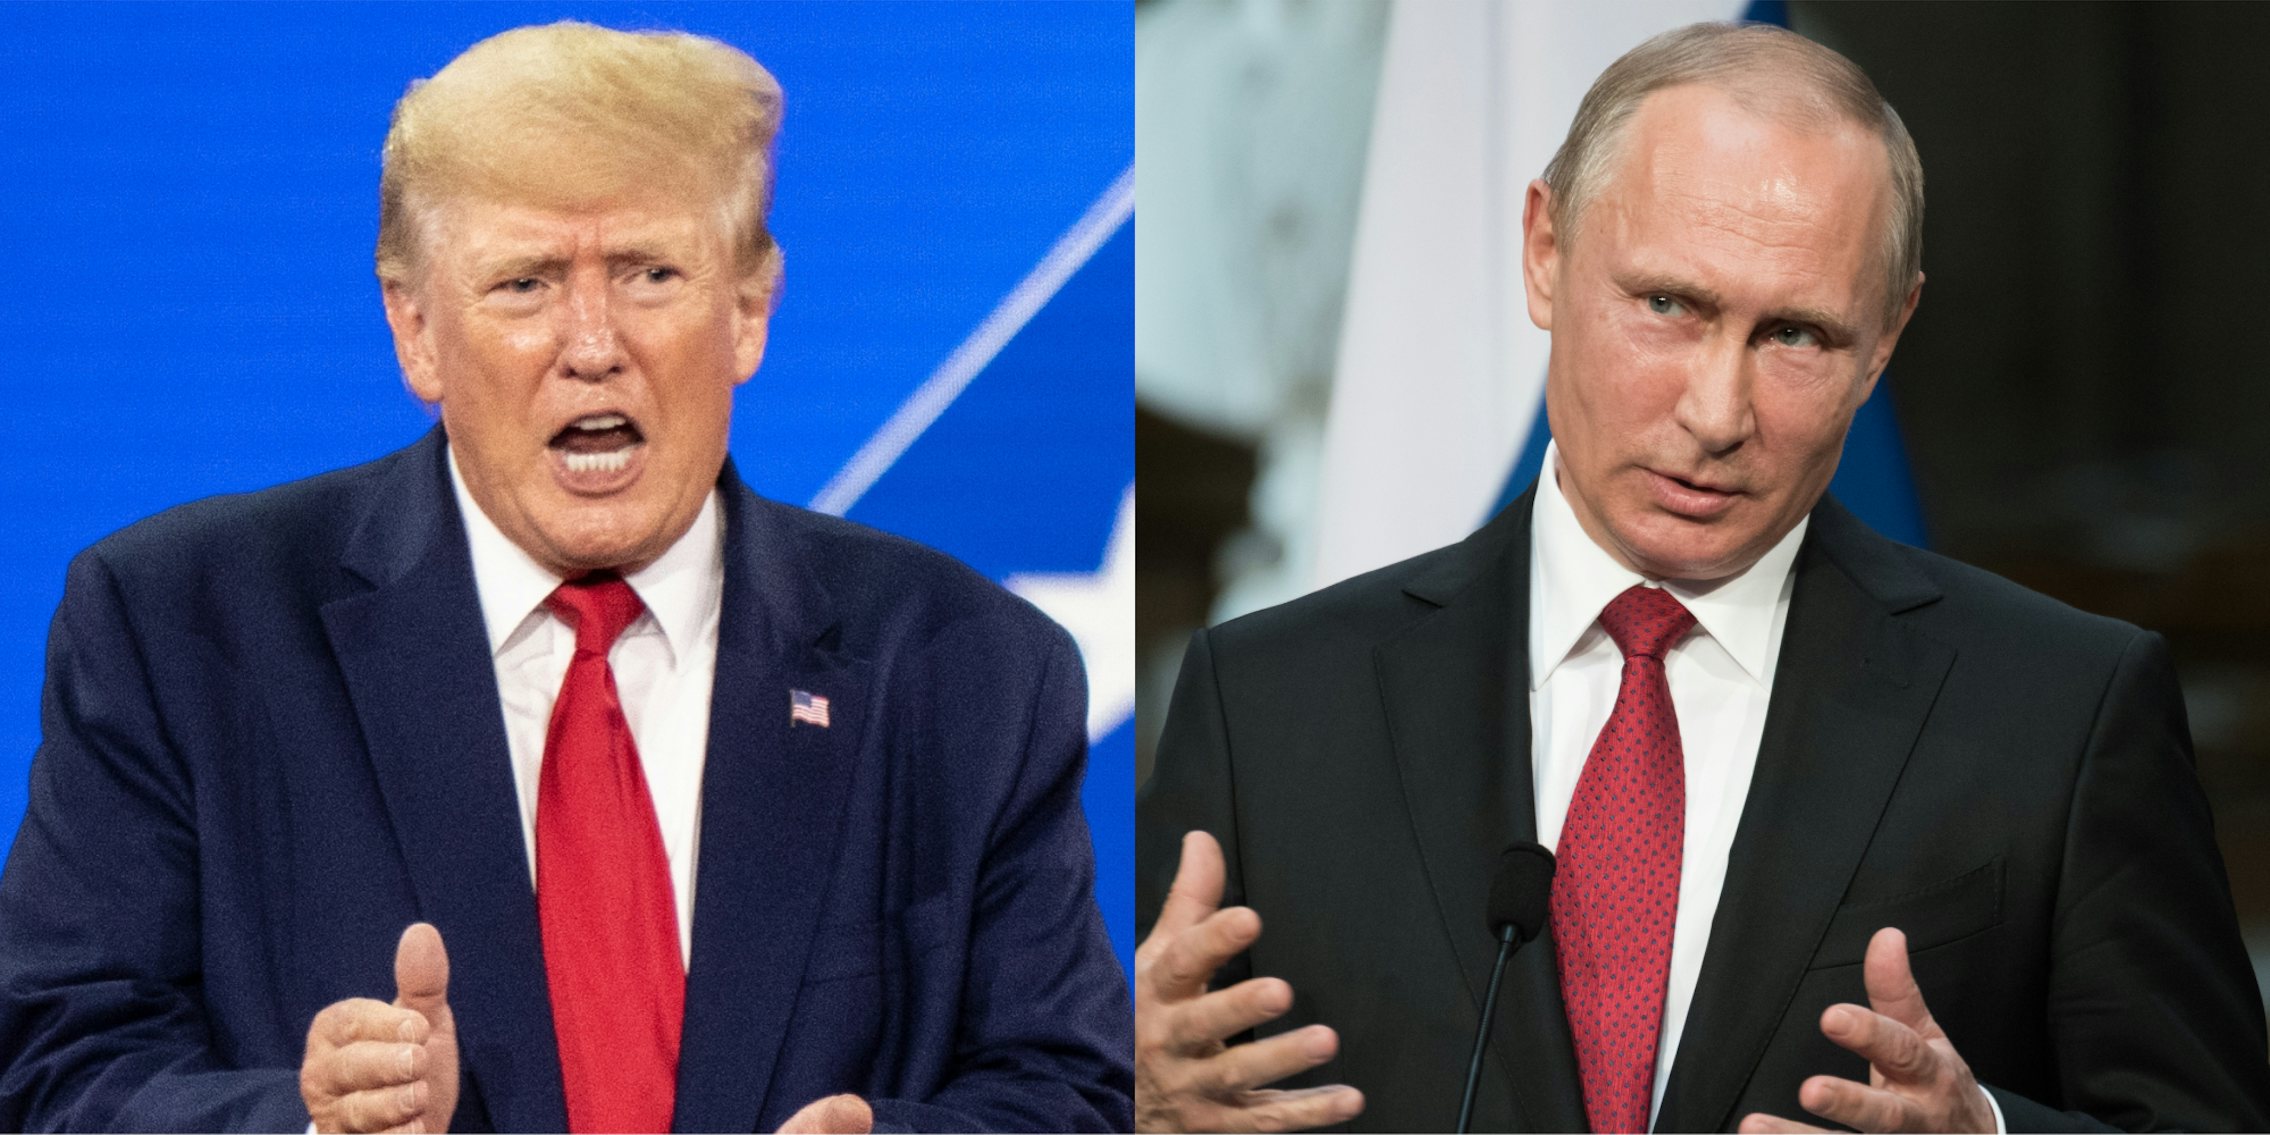 Donald Trump speaking in front of blue background (l) Vladimir Putin speaking in front of grey background (r)